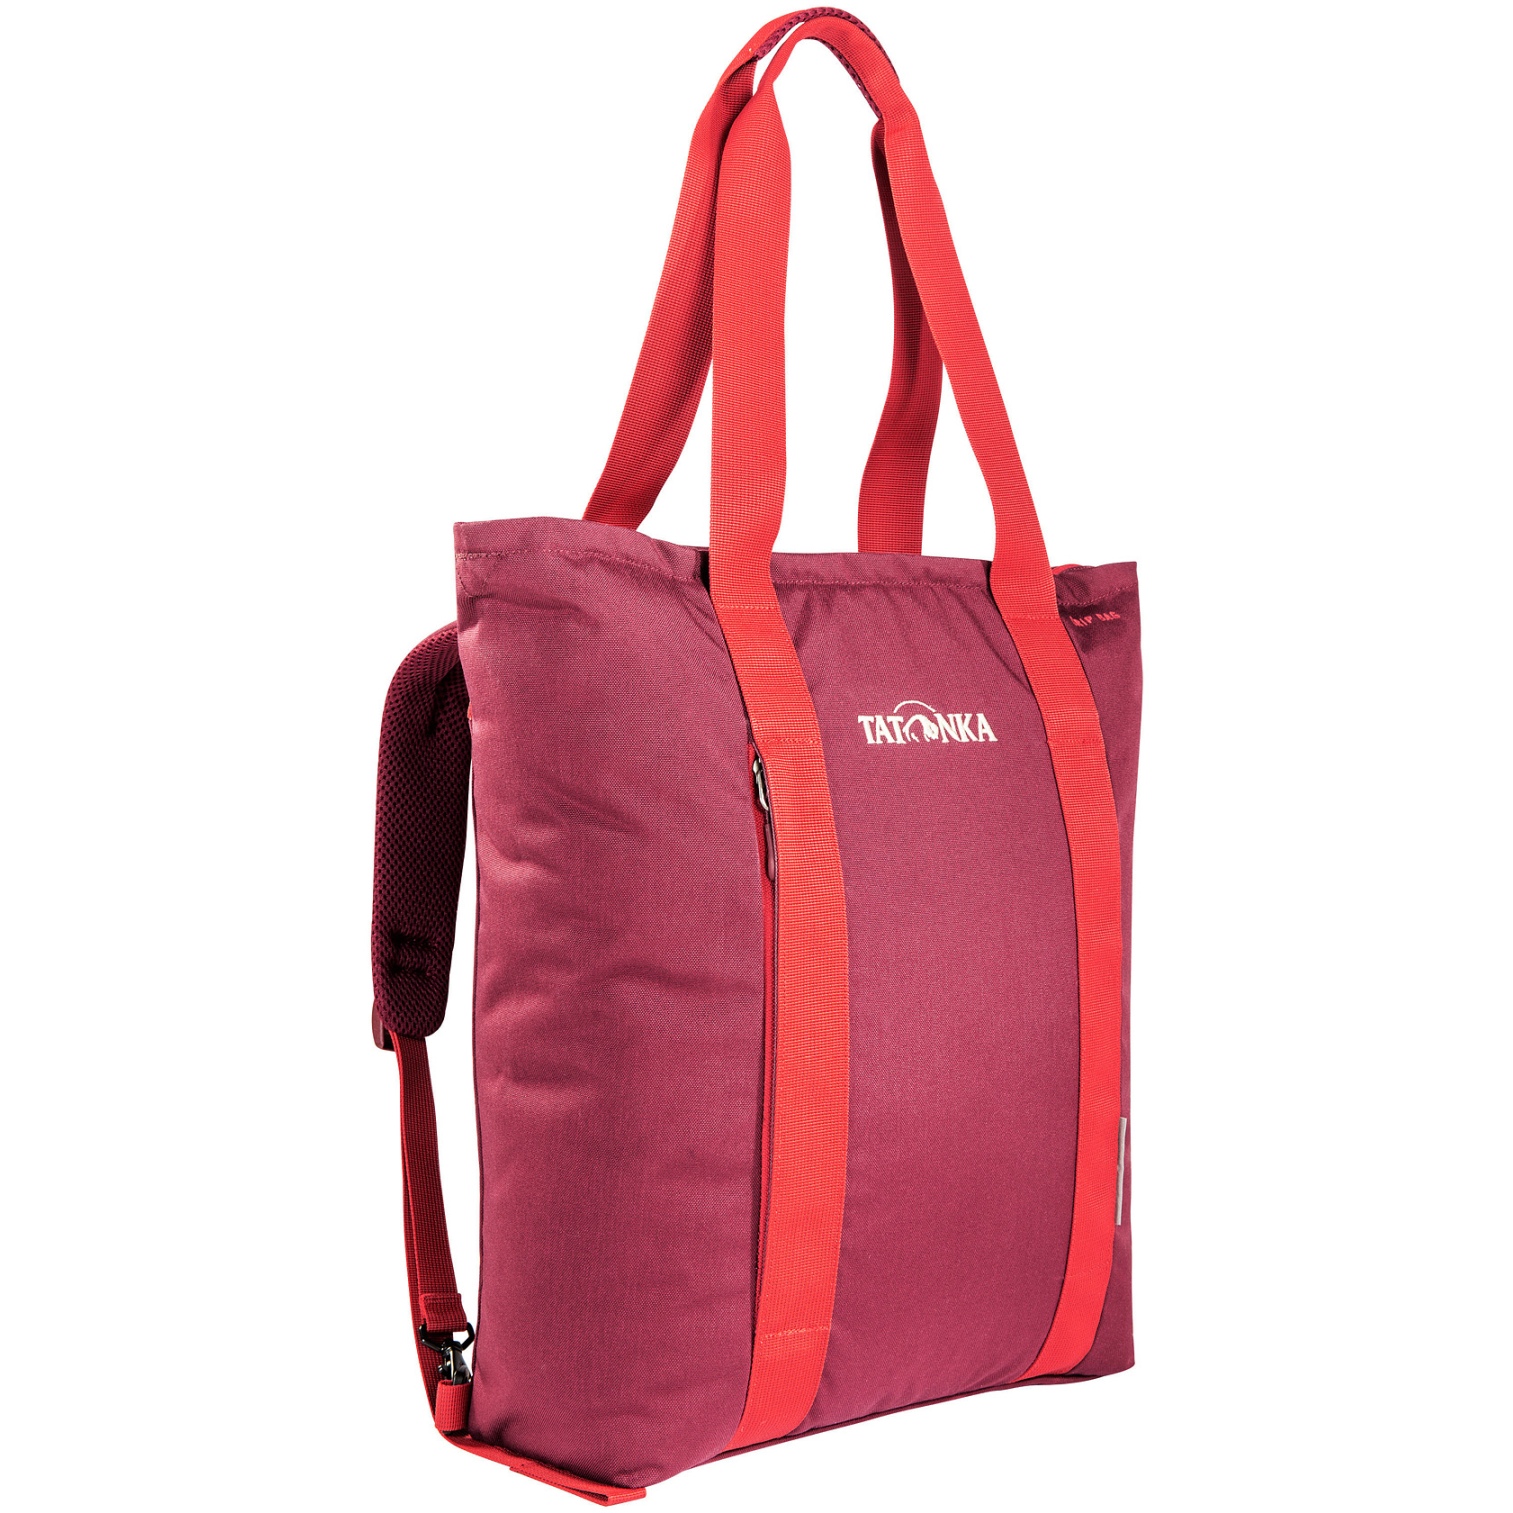 Picture of Tatonka Grip Bag Shoulderbag - bordeaux red